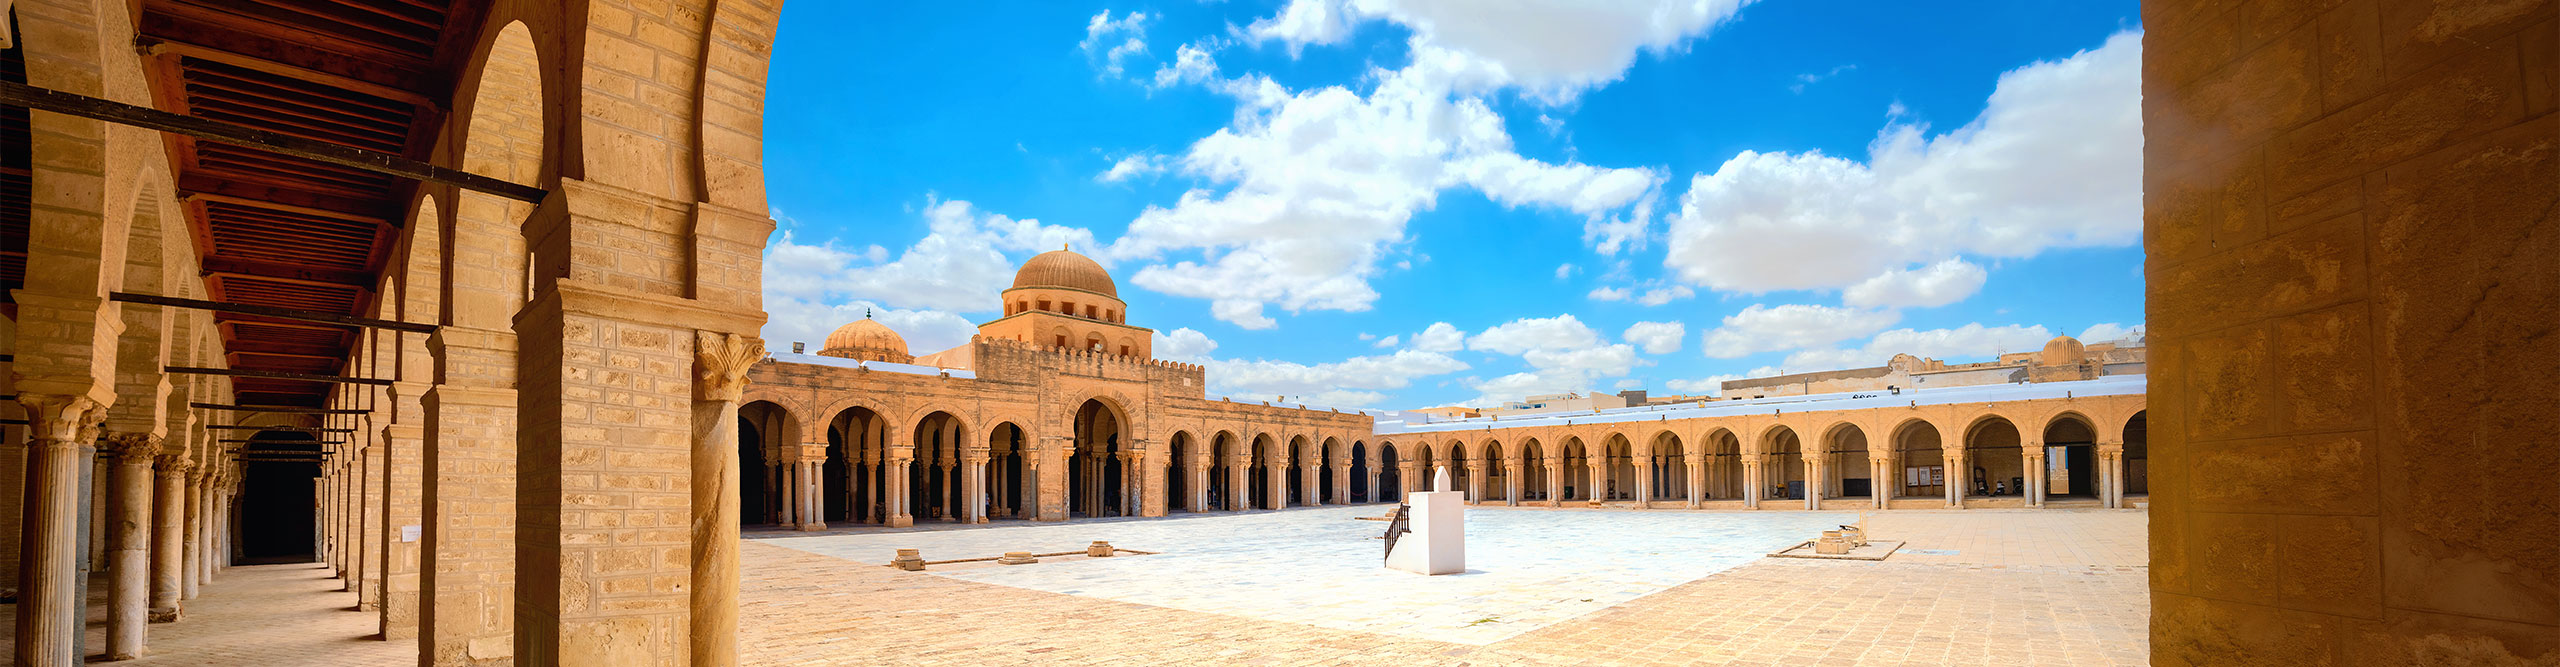 Kairouan Great Mosque inner courtyard walls , Tunisia